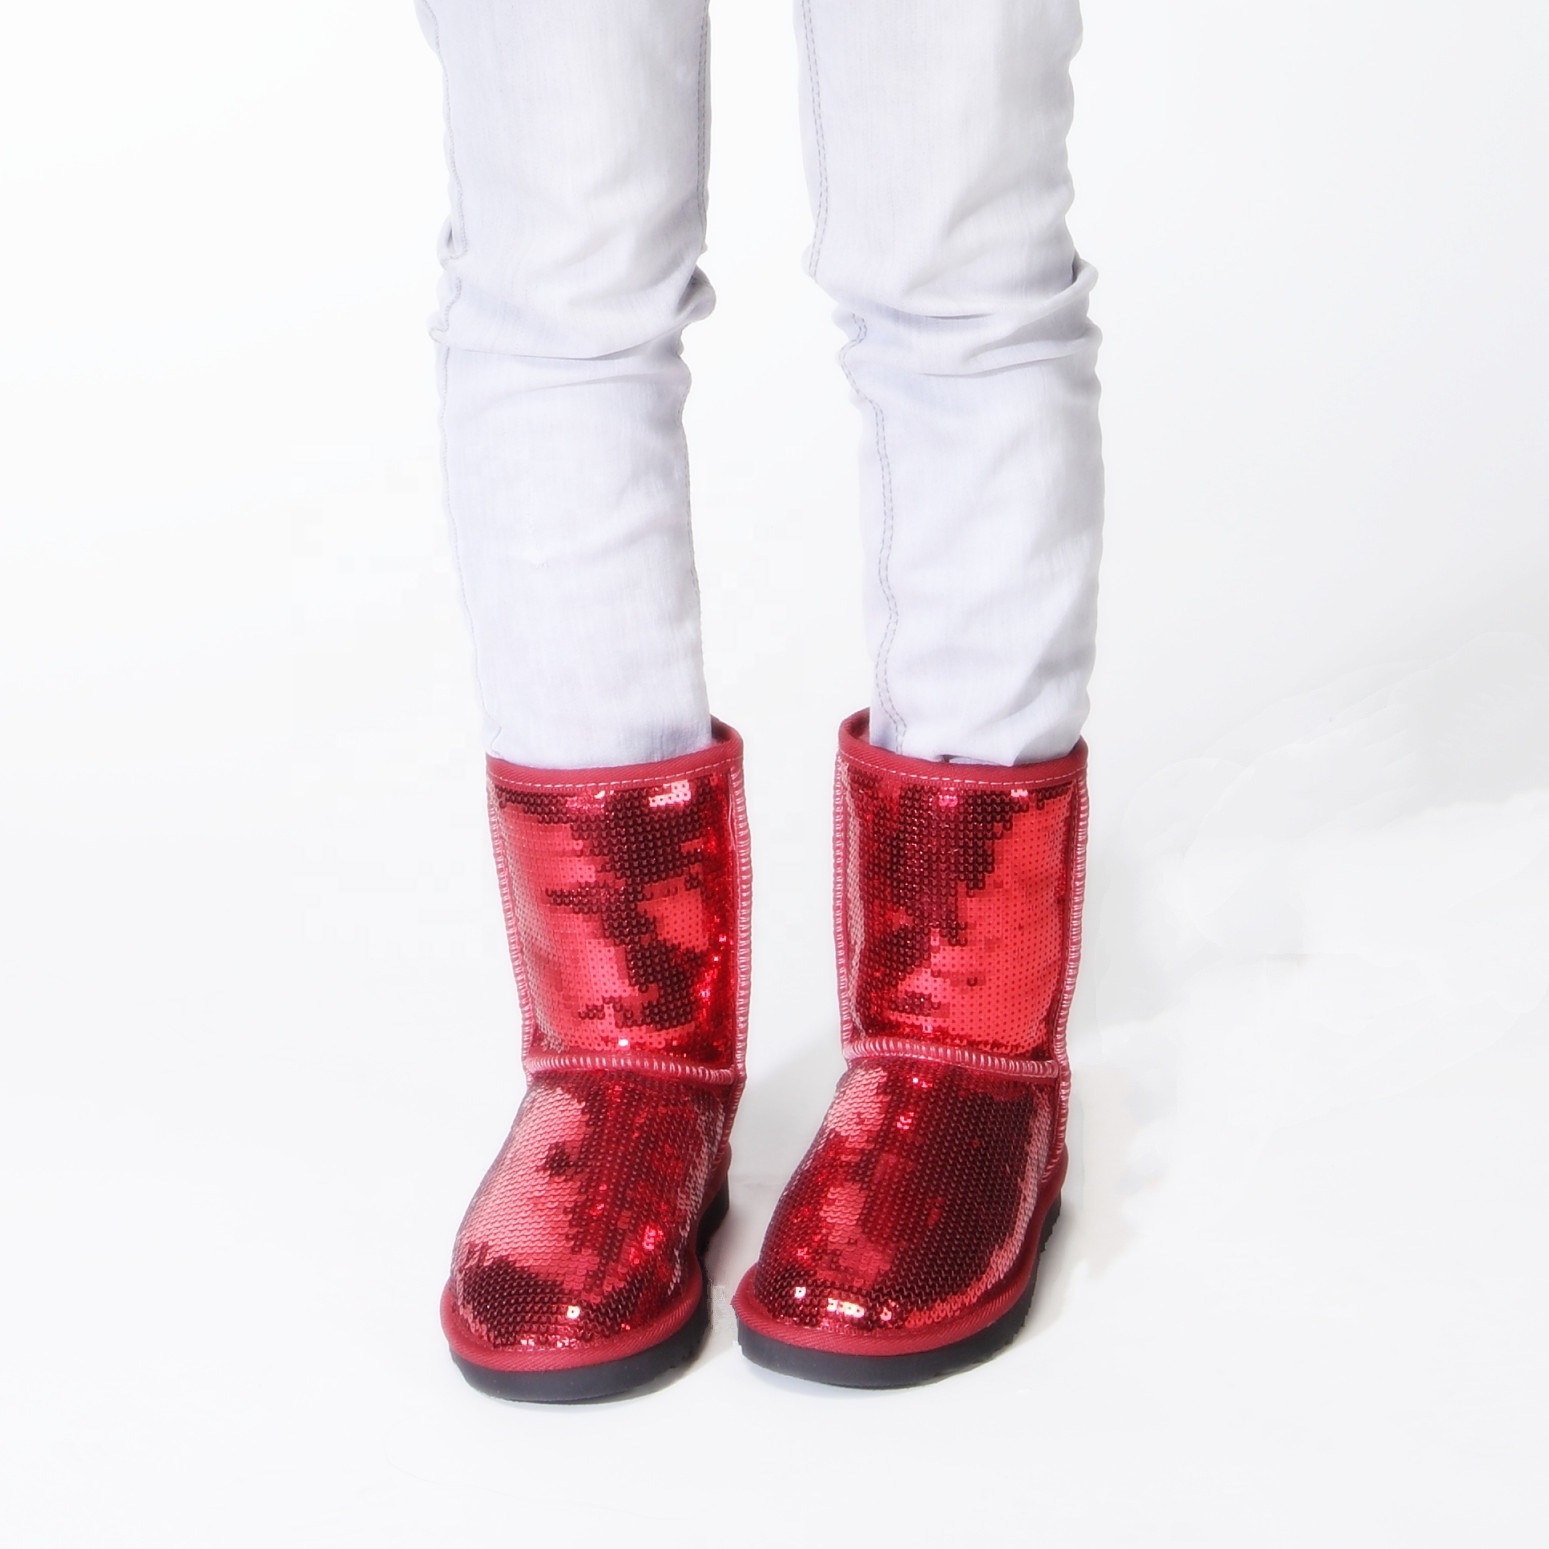 HQB-WS081 OEM customized premium quality winter thermal fashion style genuine sheepskin boots for women